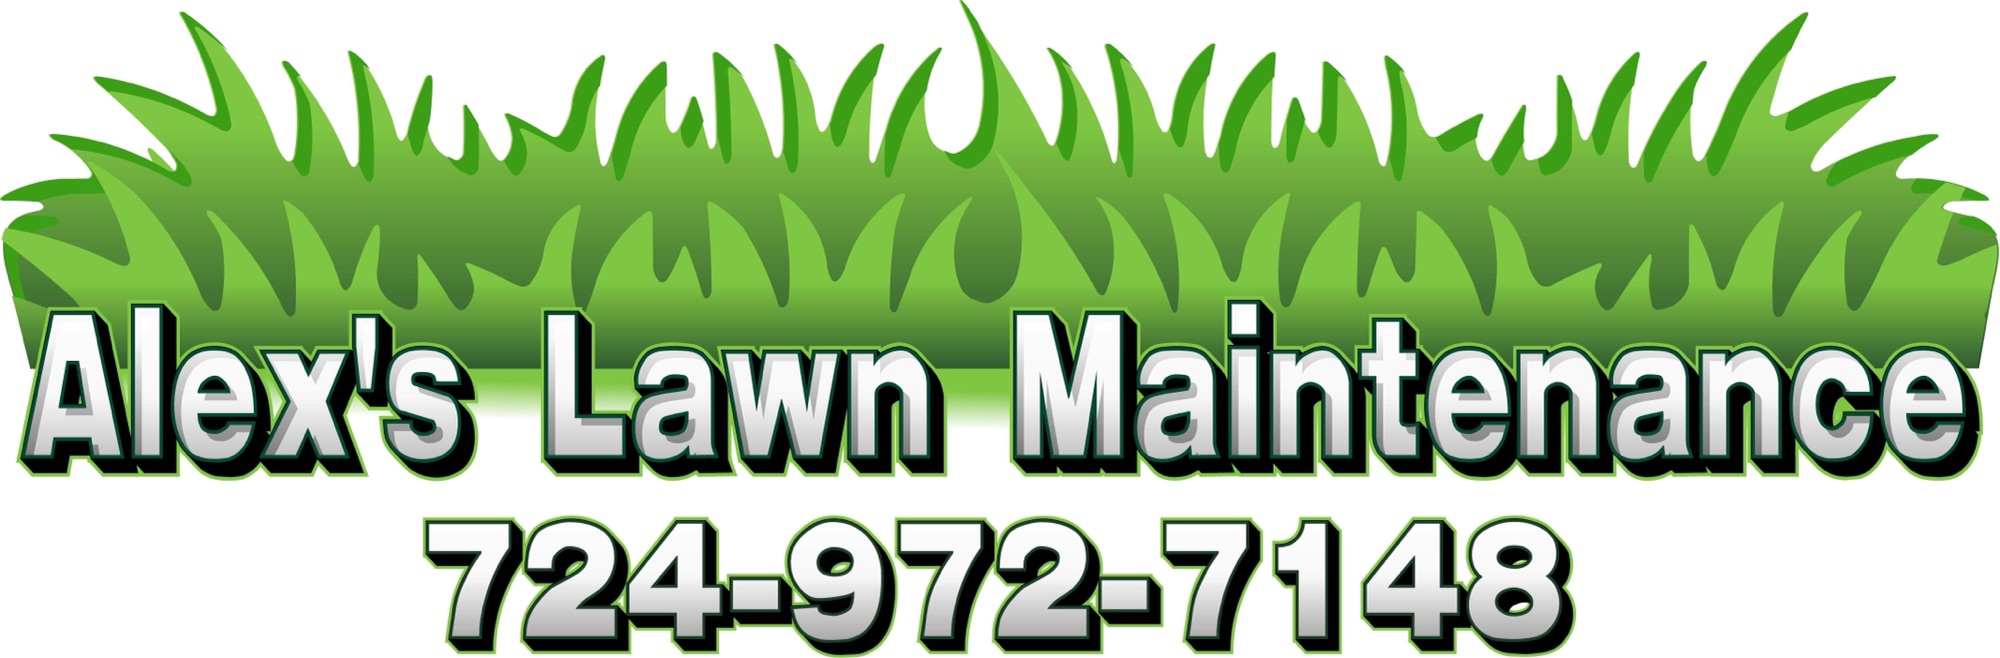 Alexs Lawn Maintenance - Home  Facebook Logo